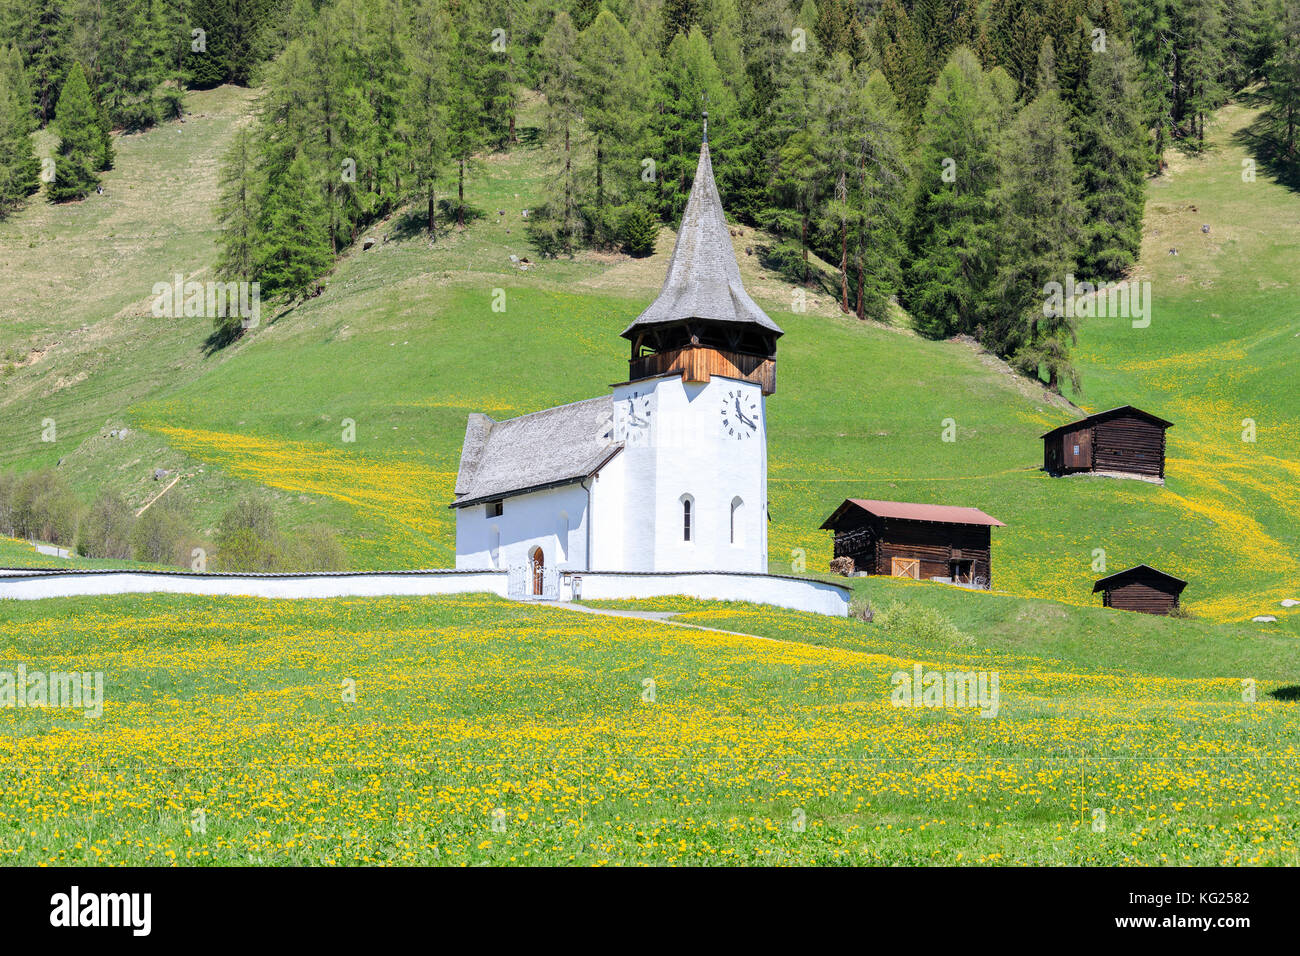 Alpine church and huts, Davos, Canton of Graubunden, Prettigovia Davos Region, Switzerland, Europe Stock Photo